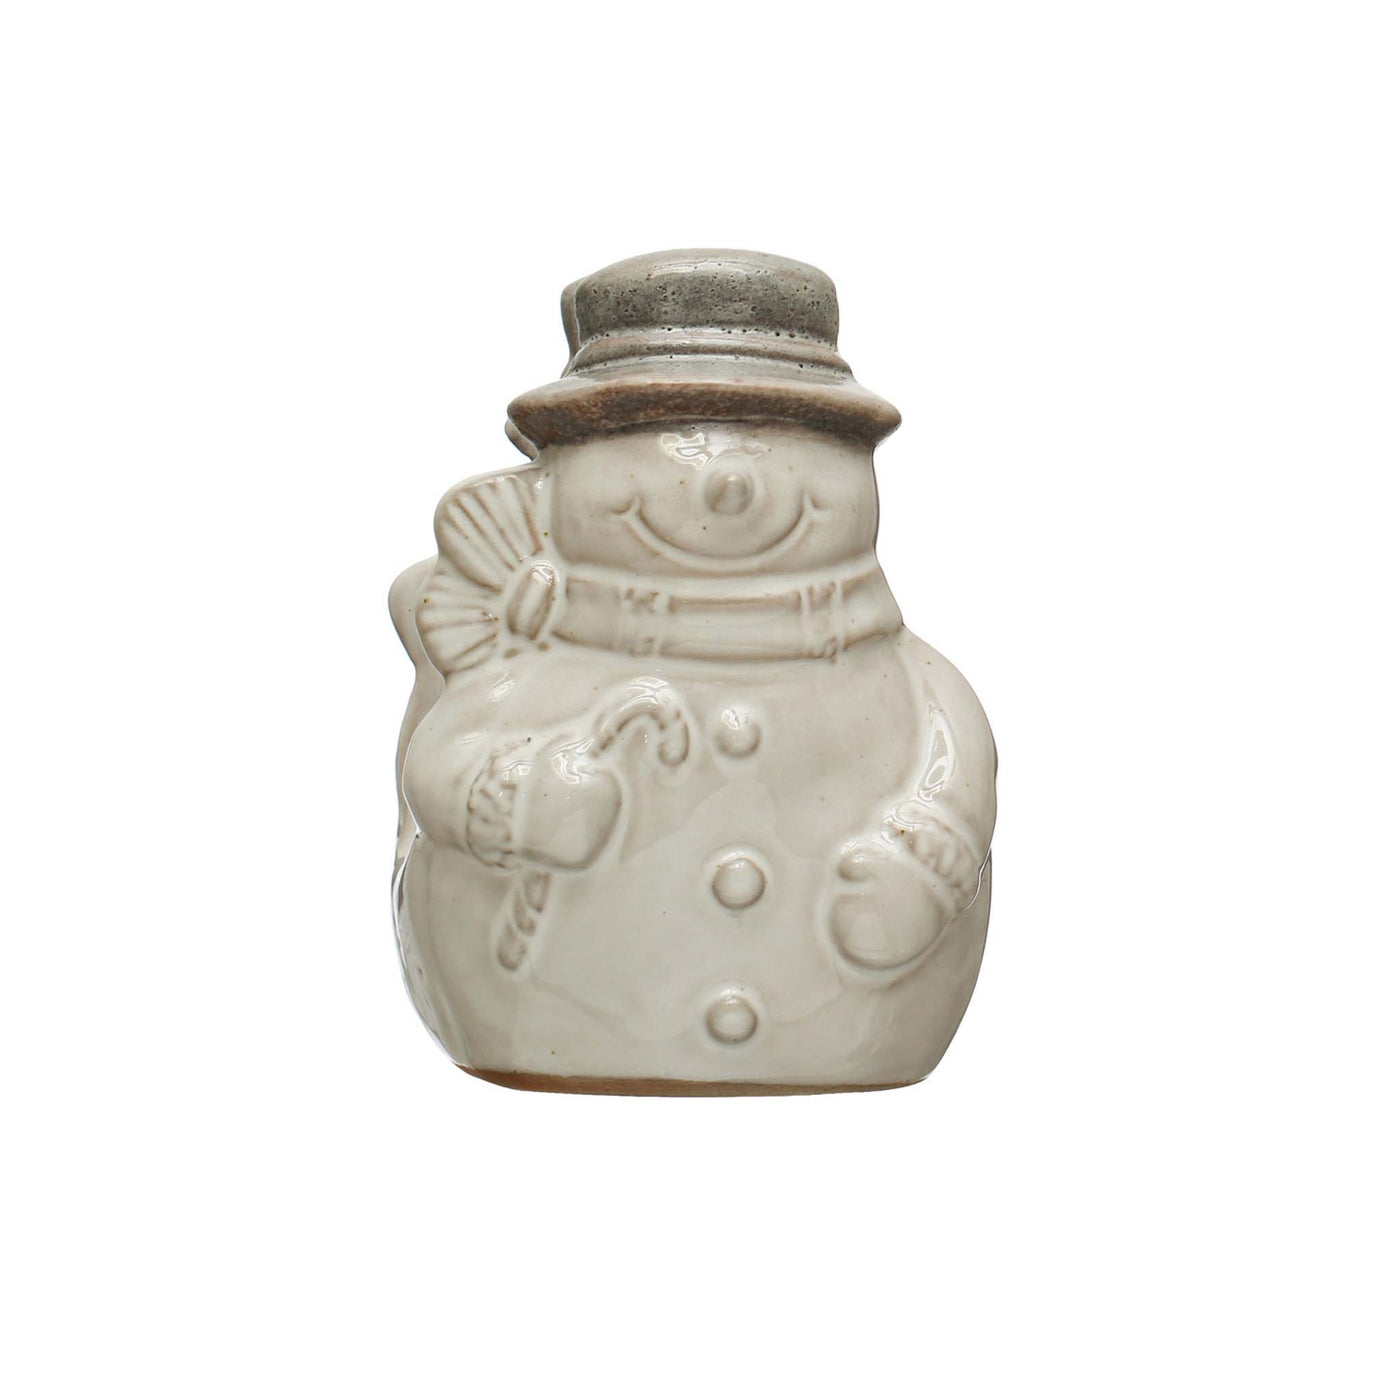 Snowman Stoneware Sponge Holder